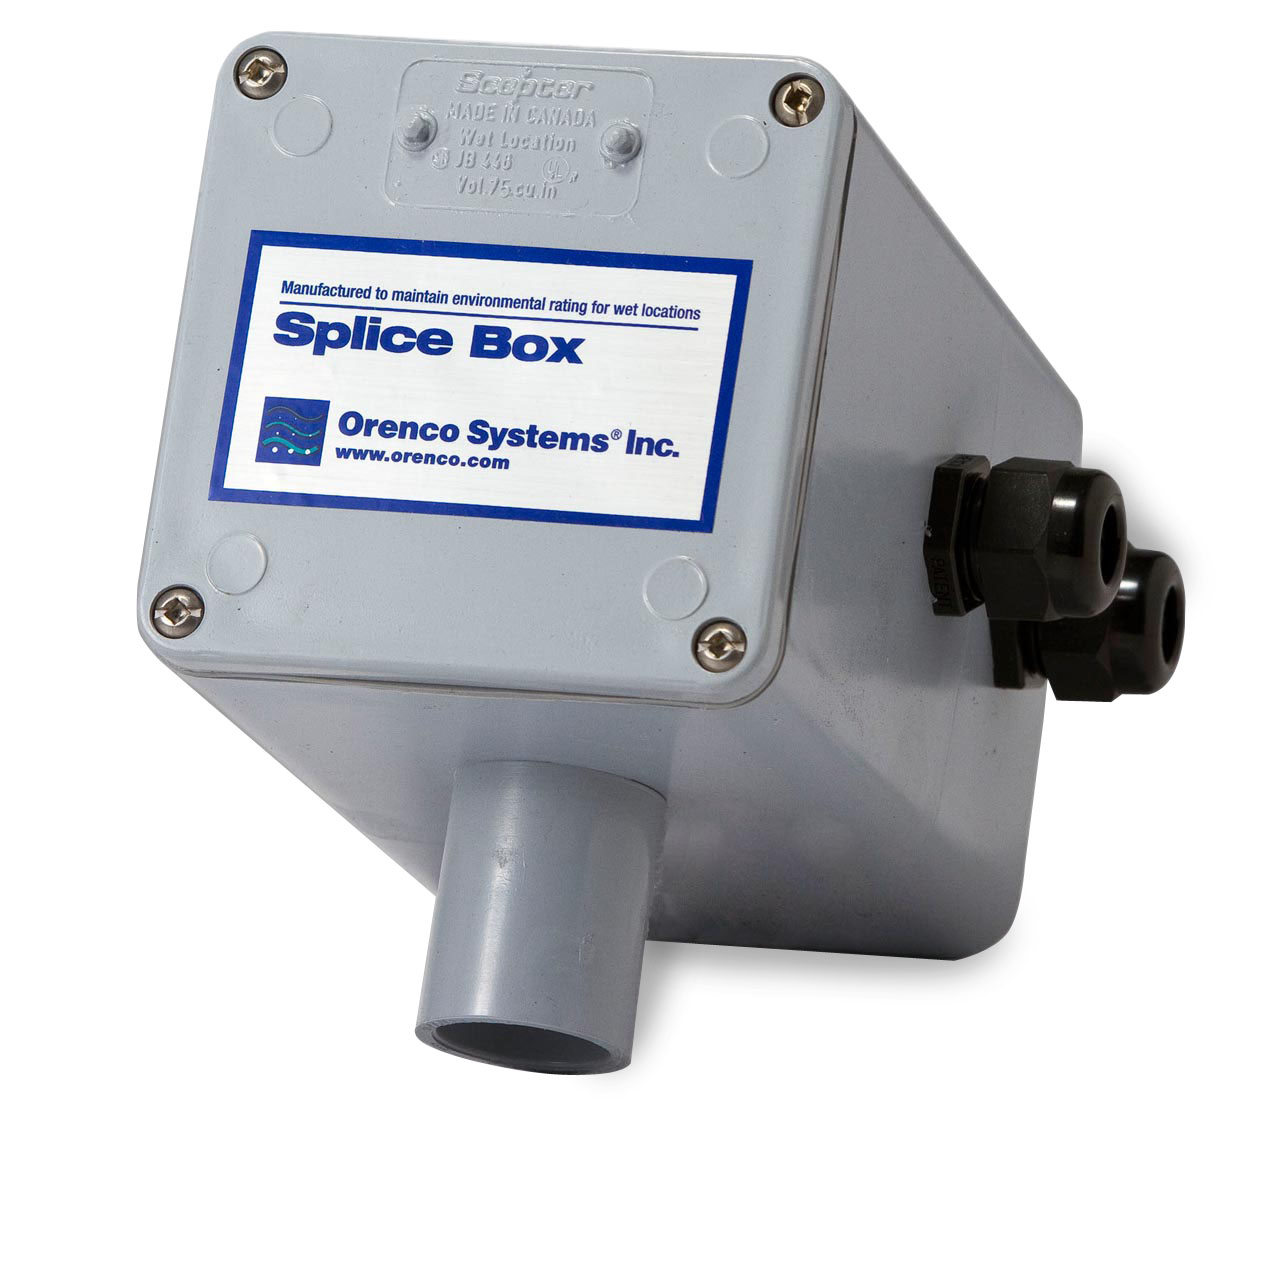 Orenco SB4 Internal Electrical Splice Box with 4 Cord Grips Orenco Systems Inc